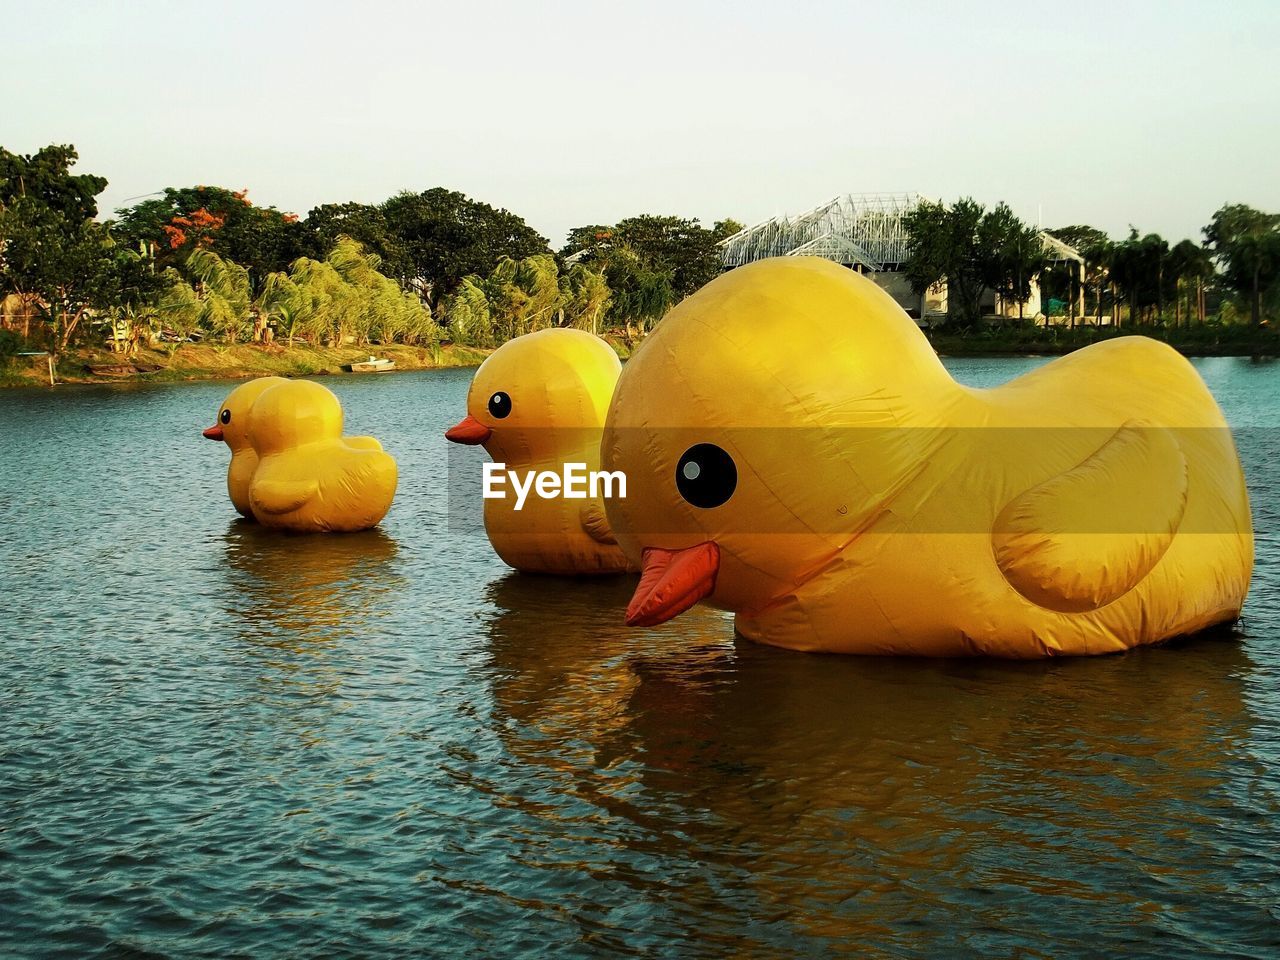 Yellow ducks on lake